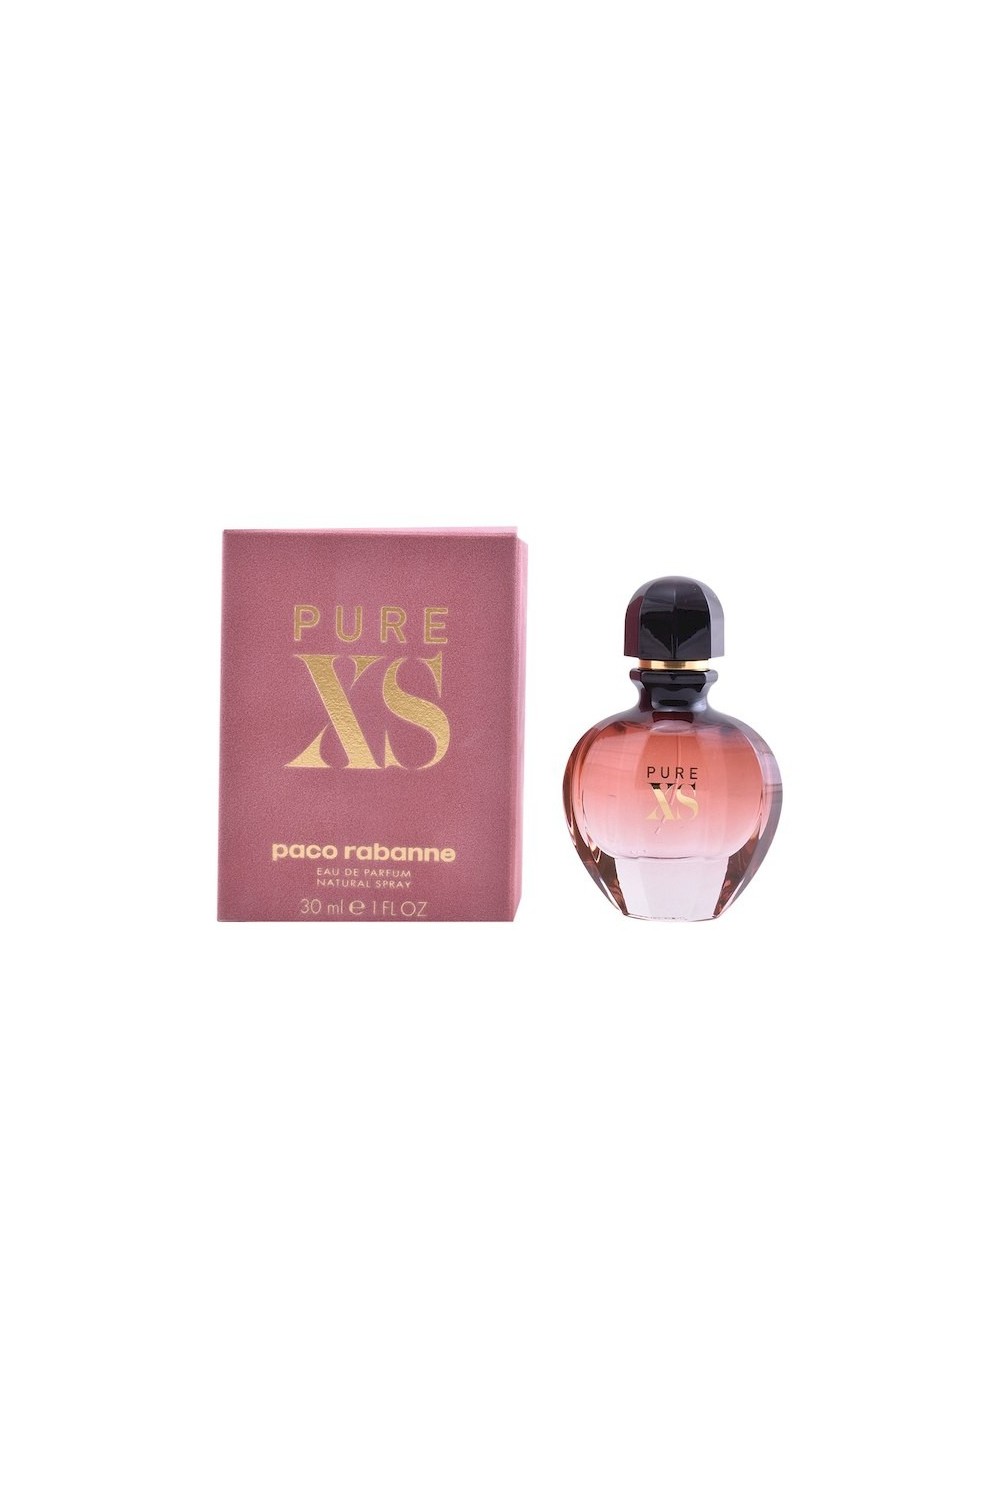 Paco Rabanne Pure XS For Her Eau De Perfume Spray 30ml